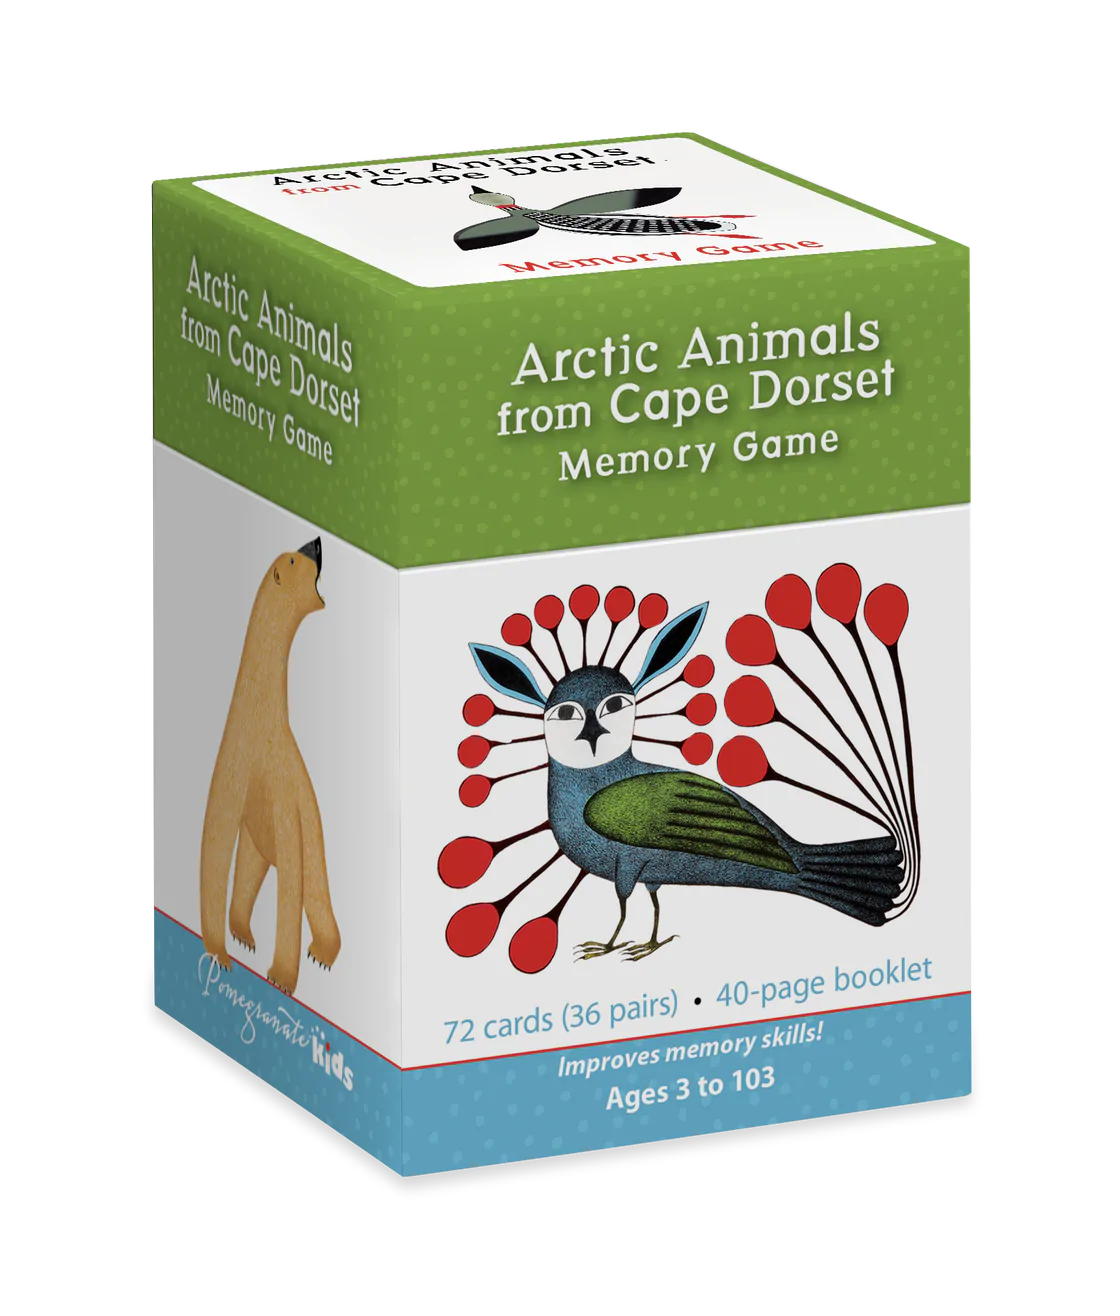 Arctic Animals from Cape Dorset Memory Game